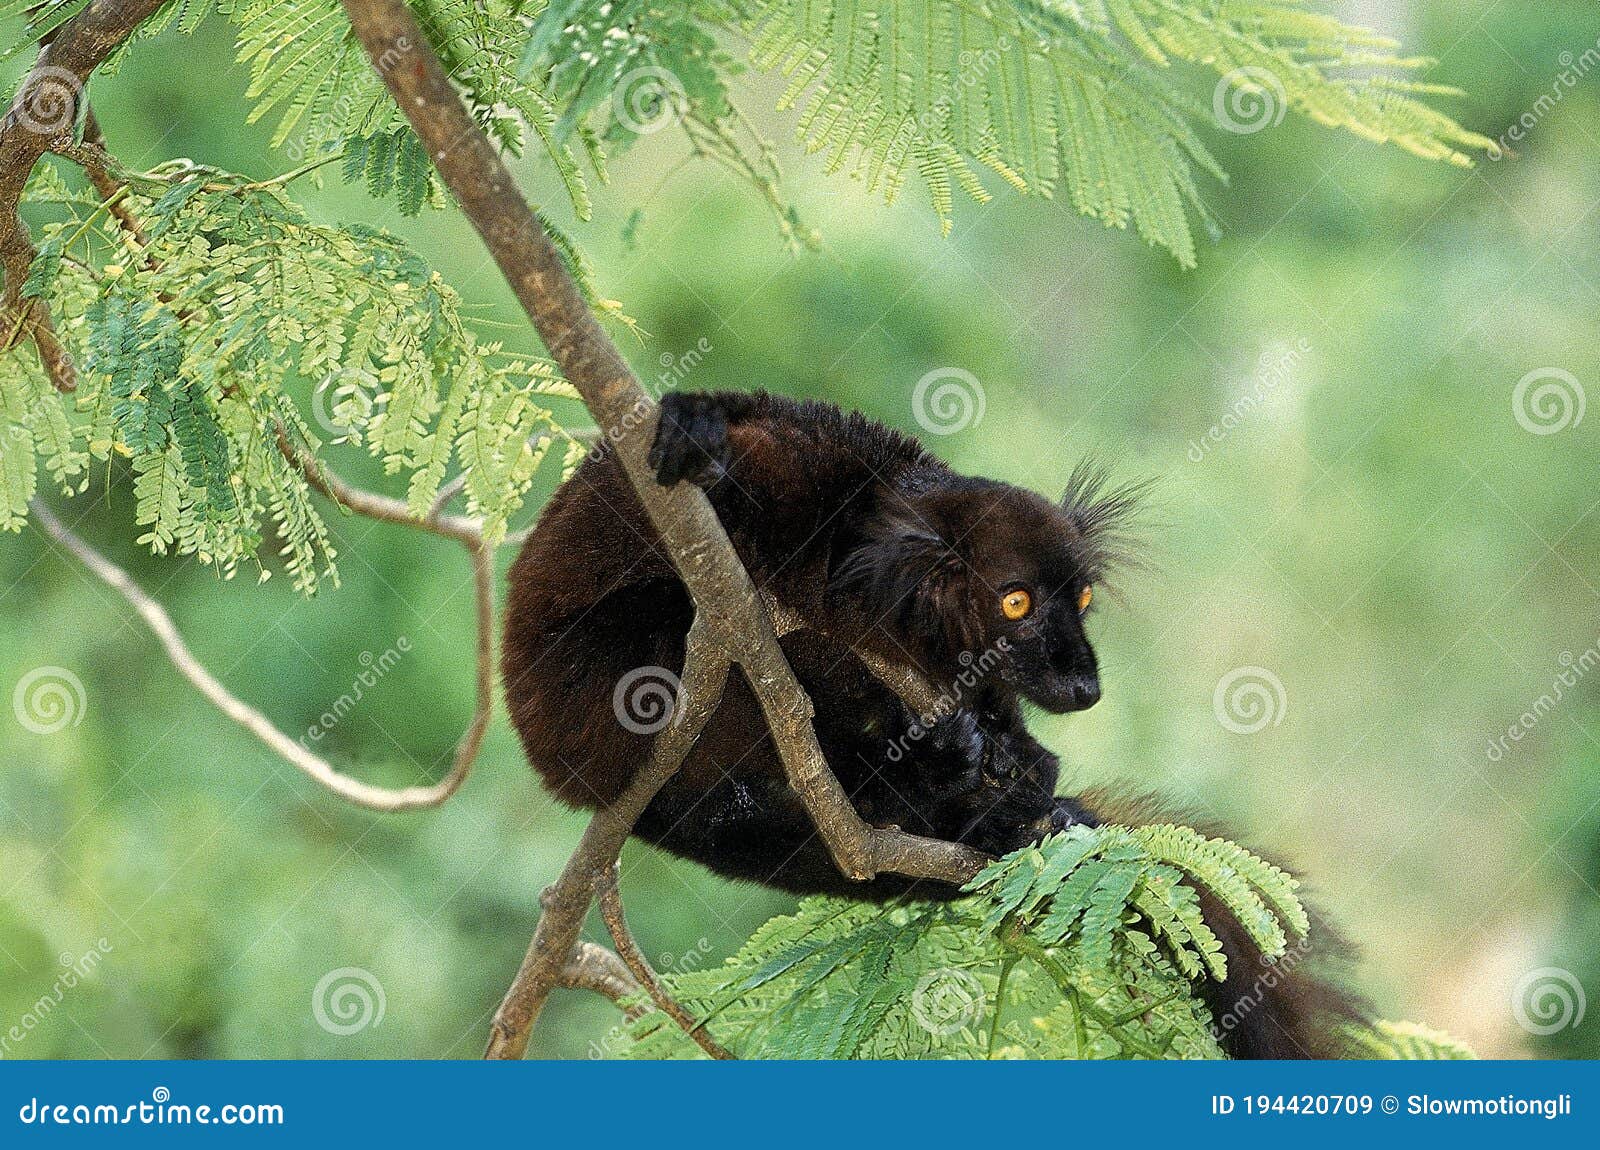 black lemur eulemur macaco, male hanging from branch, madagascar